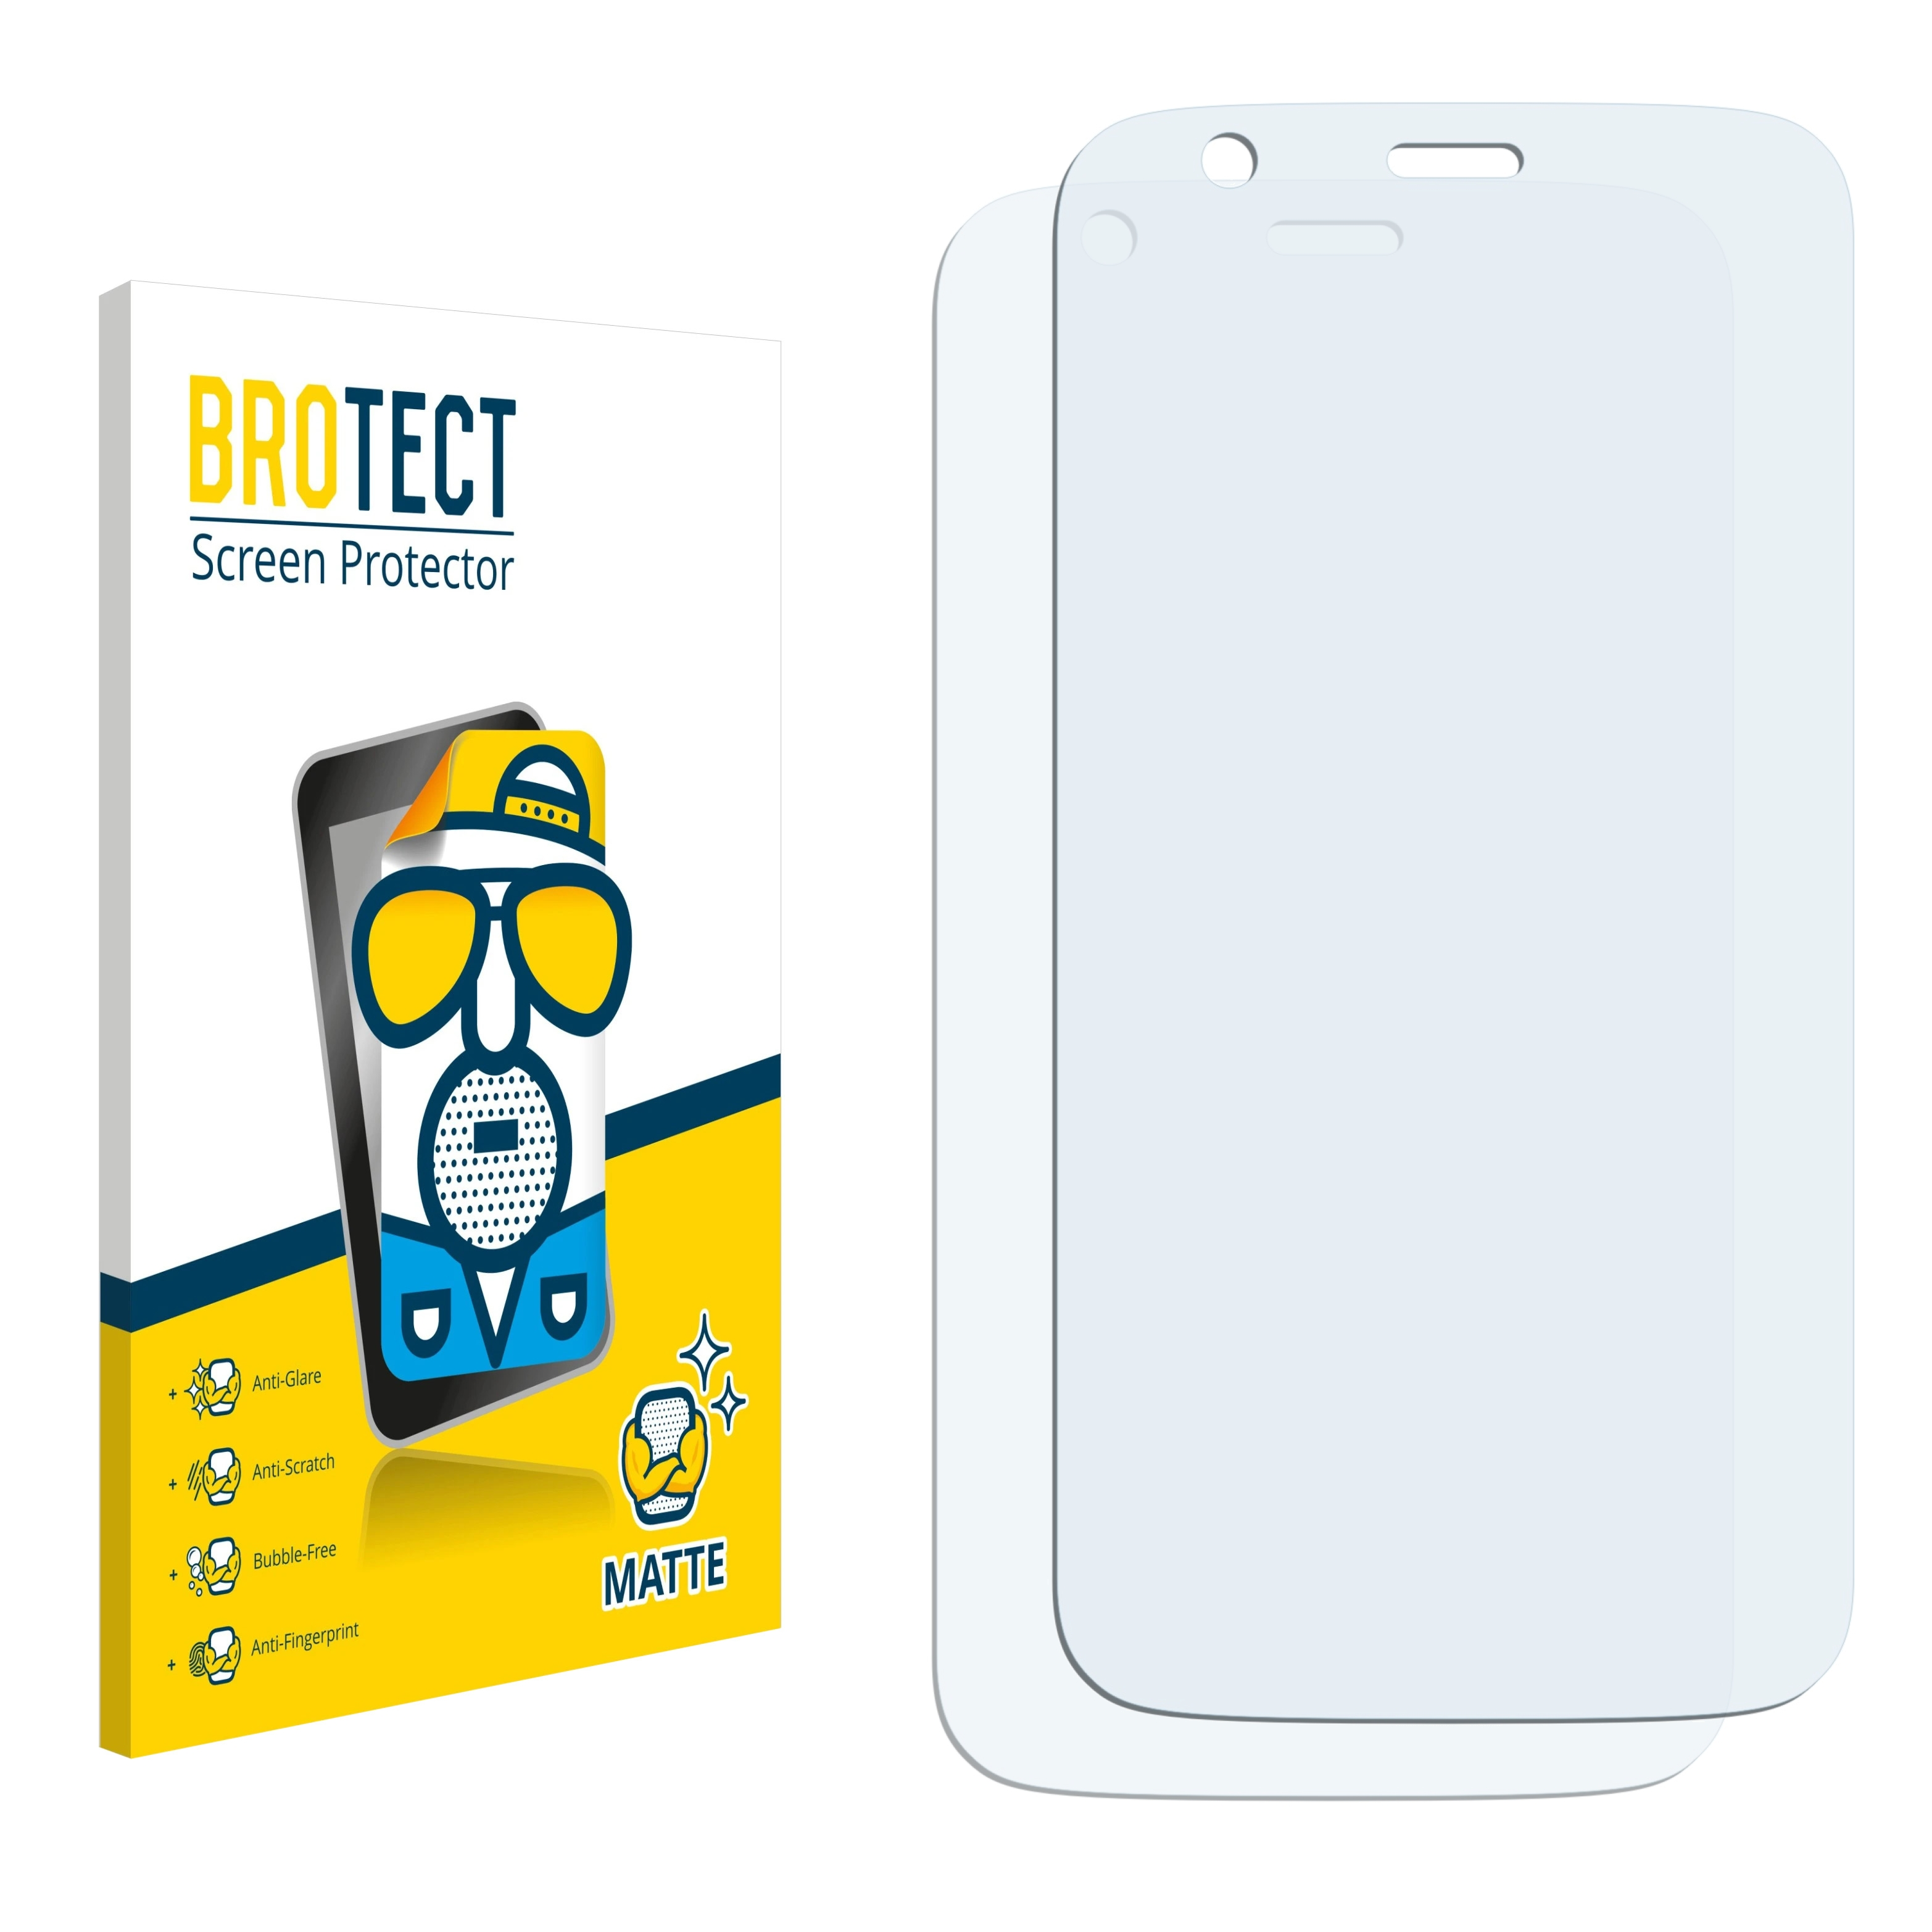 BROTECT XT1031, 2x XT1032) Motorola Schutzfolie(für matte